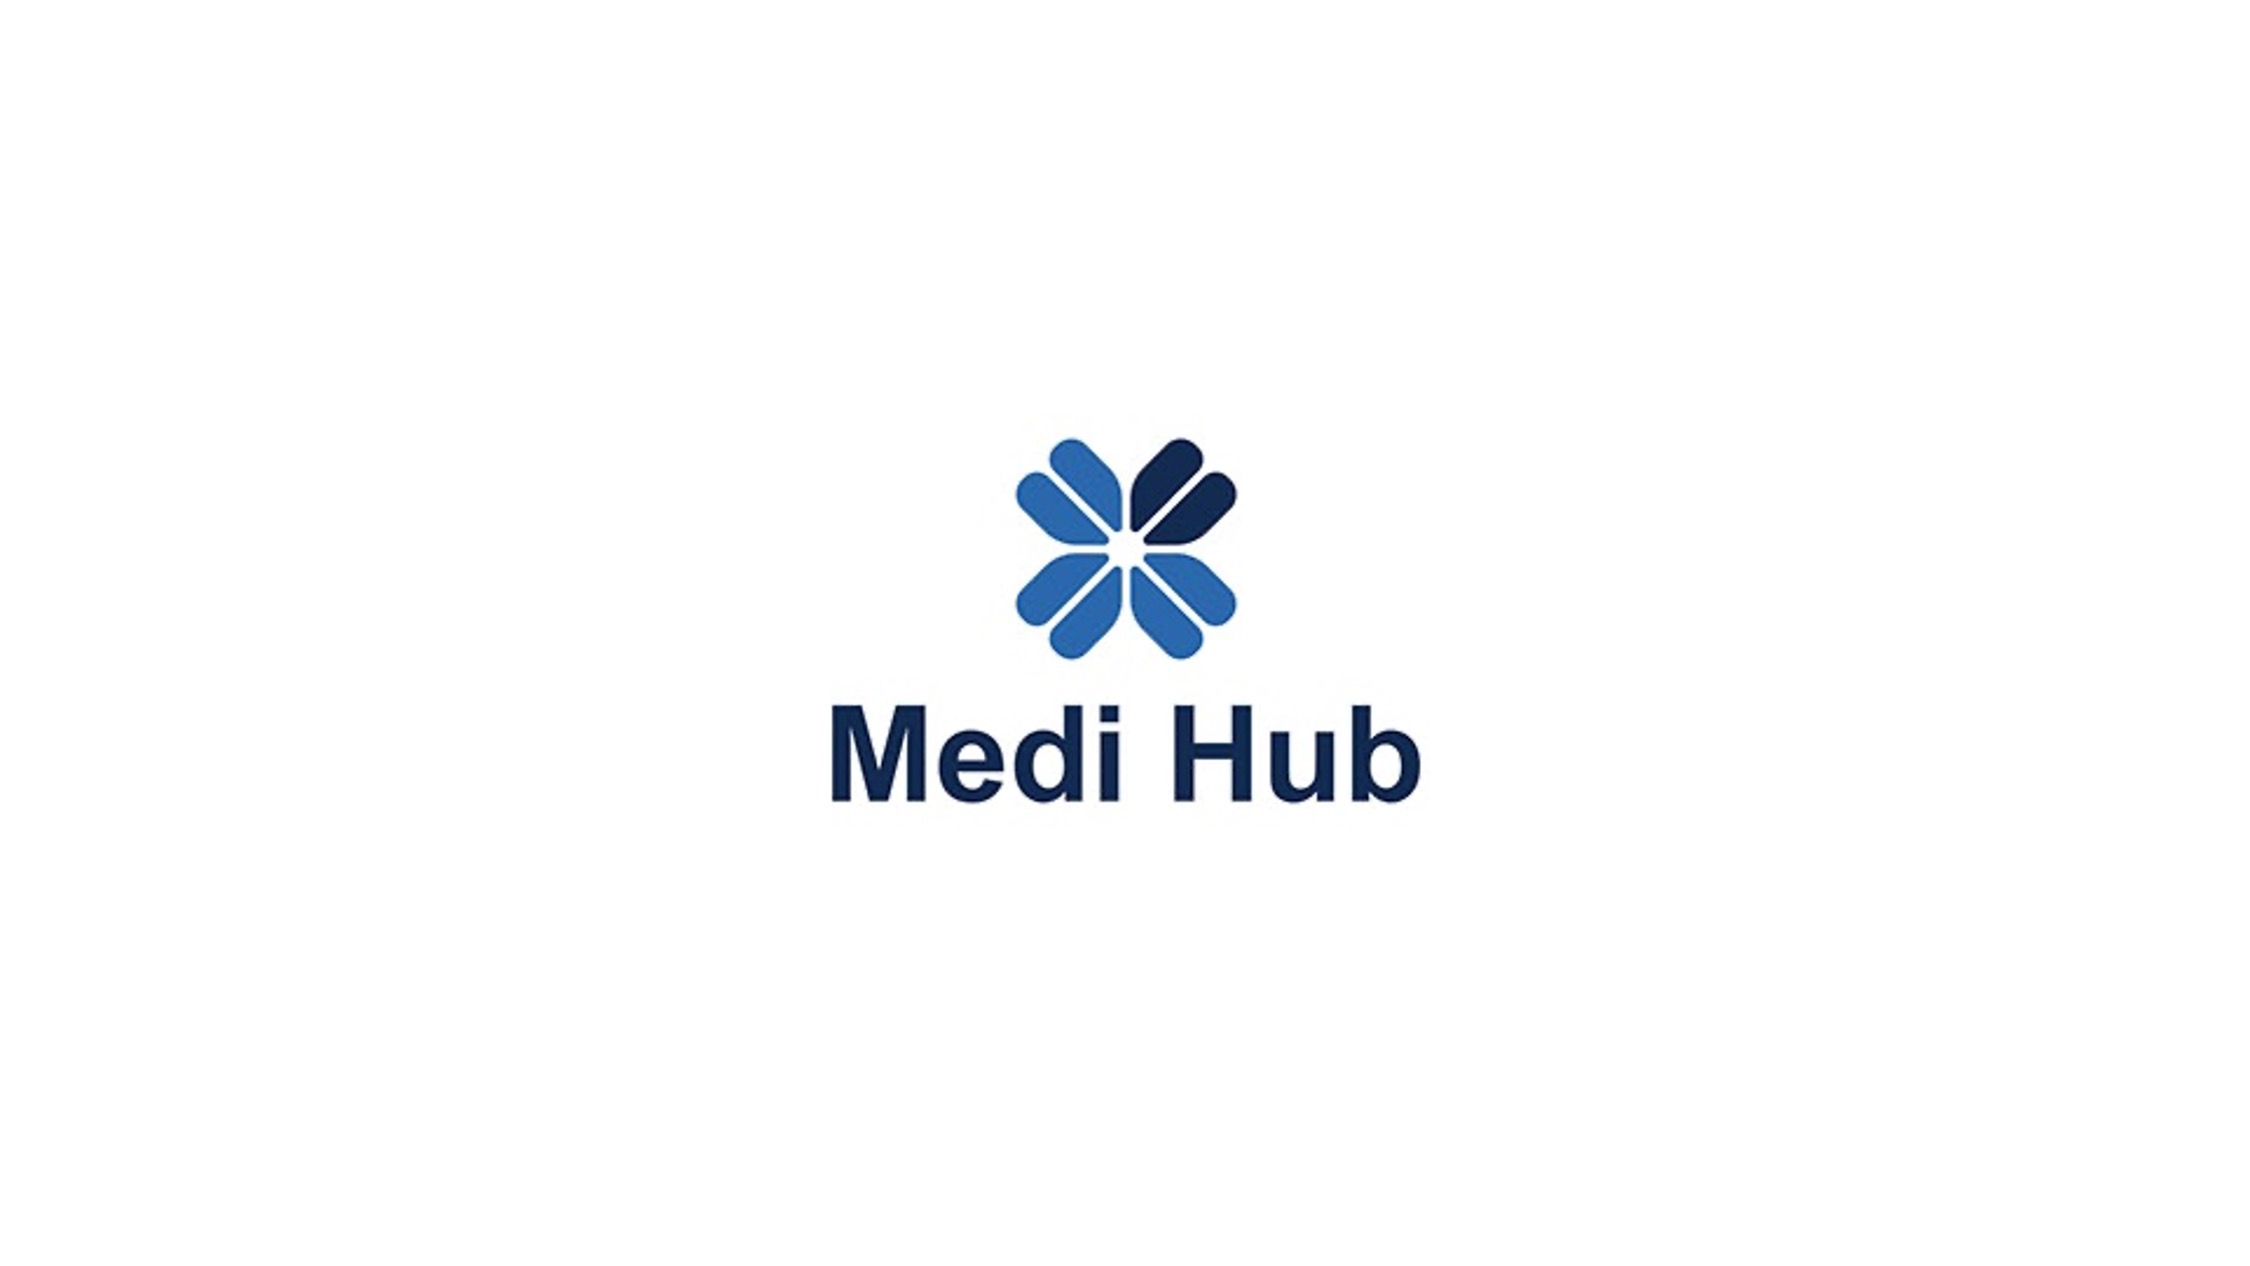 Medi Hub 株式会社